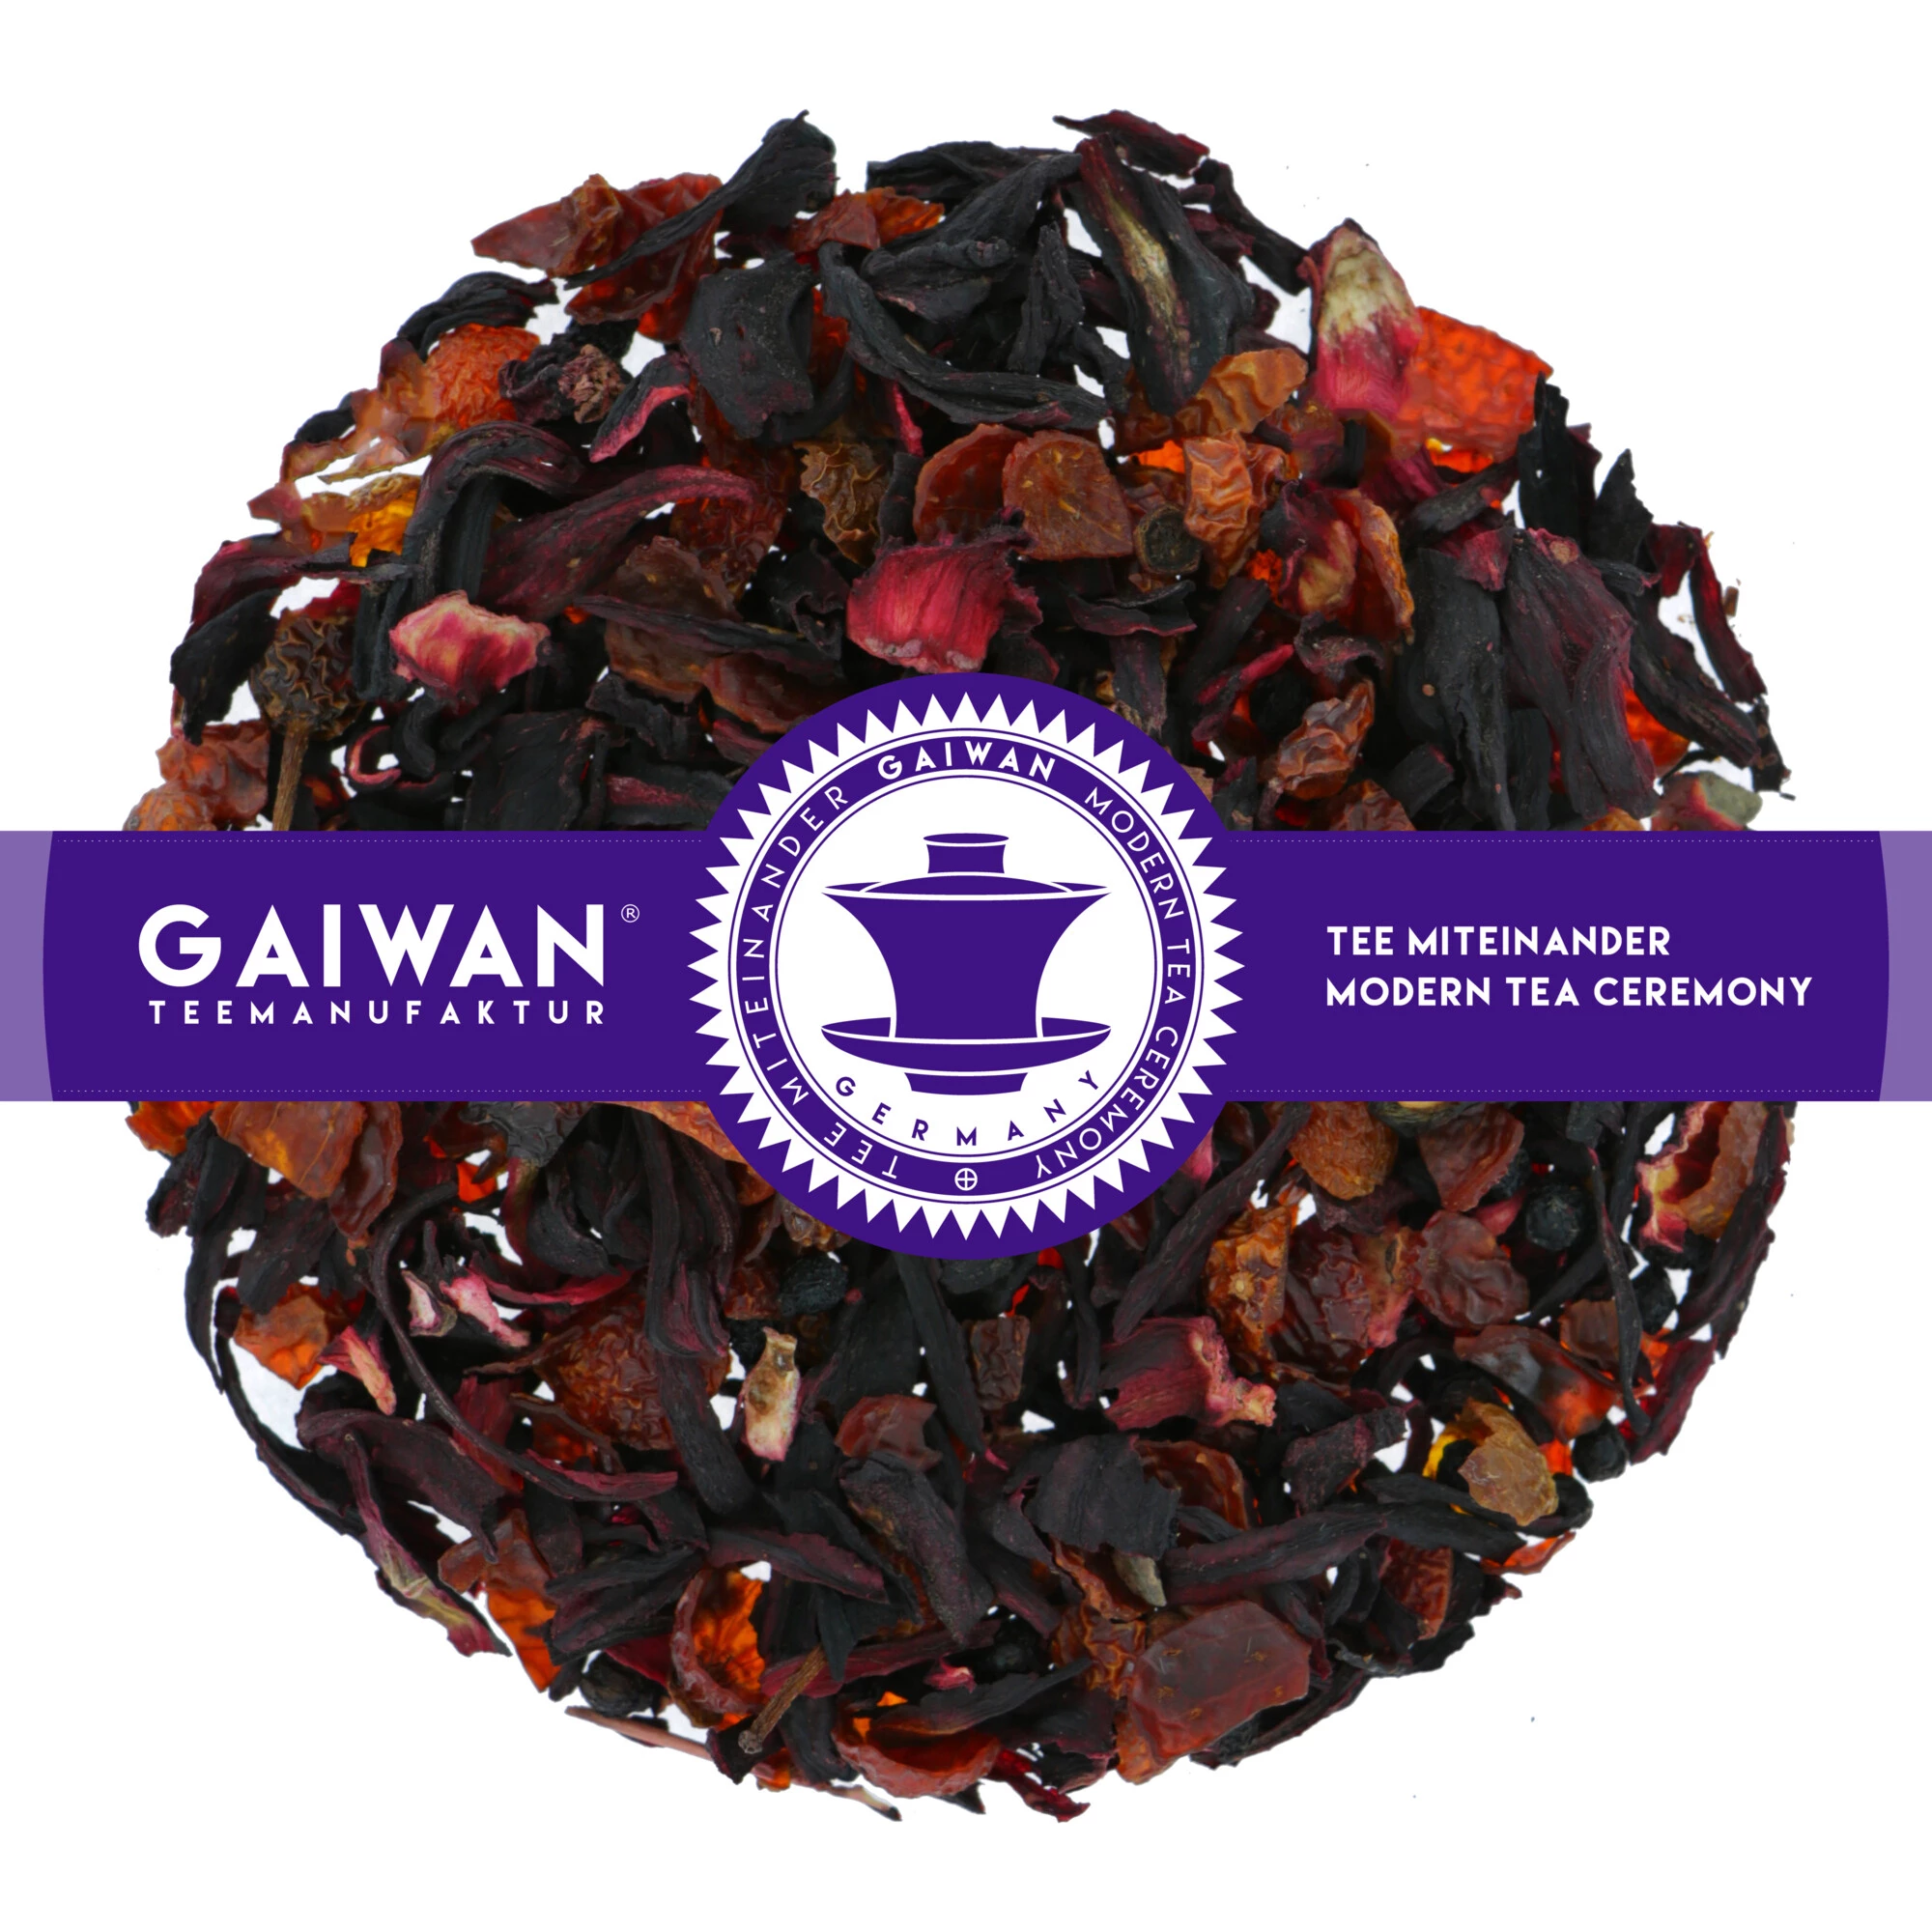 Organic fruit tea loose leaf "Berry Mix"  - GAIWAN® Tea No. 1124